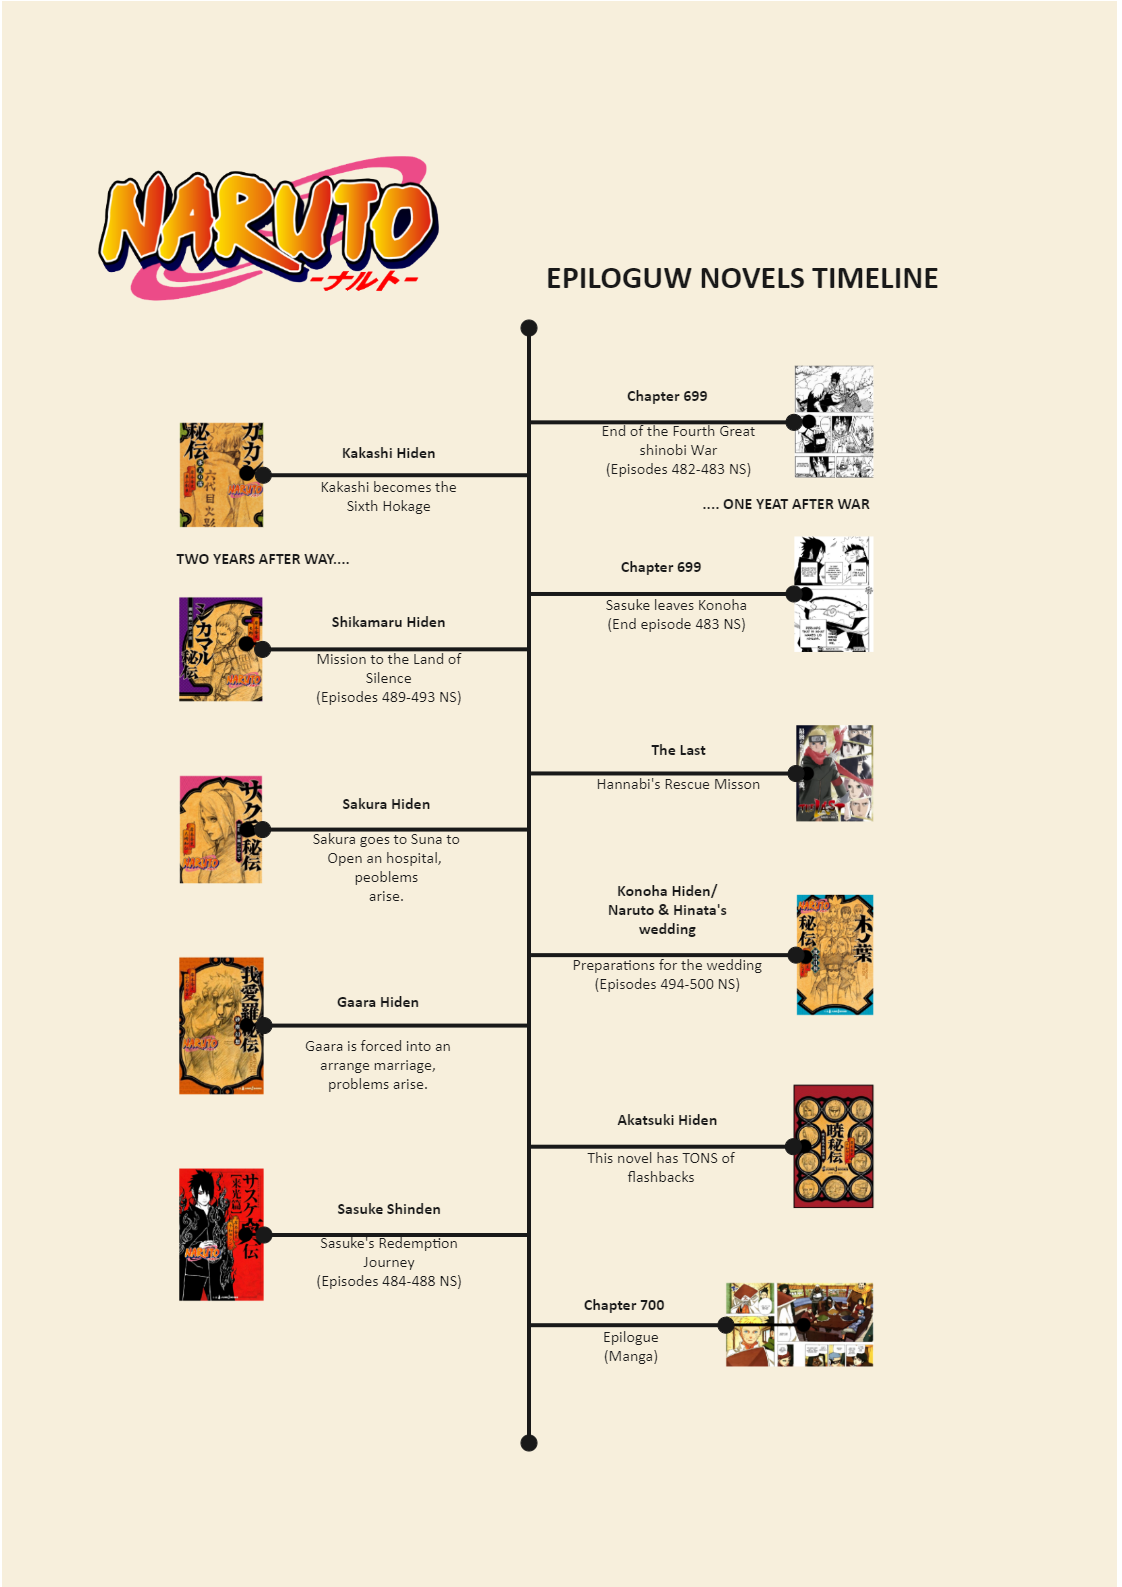 Naruto Timeline